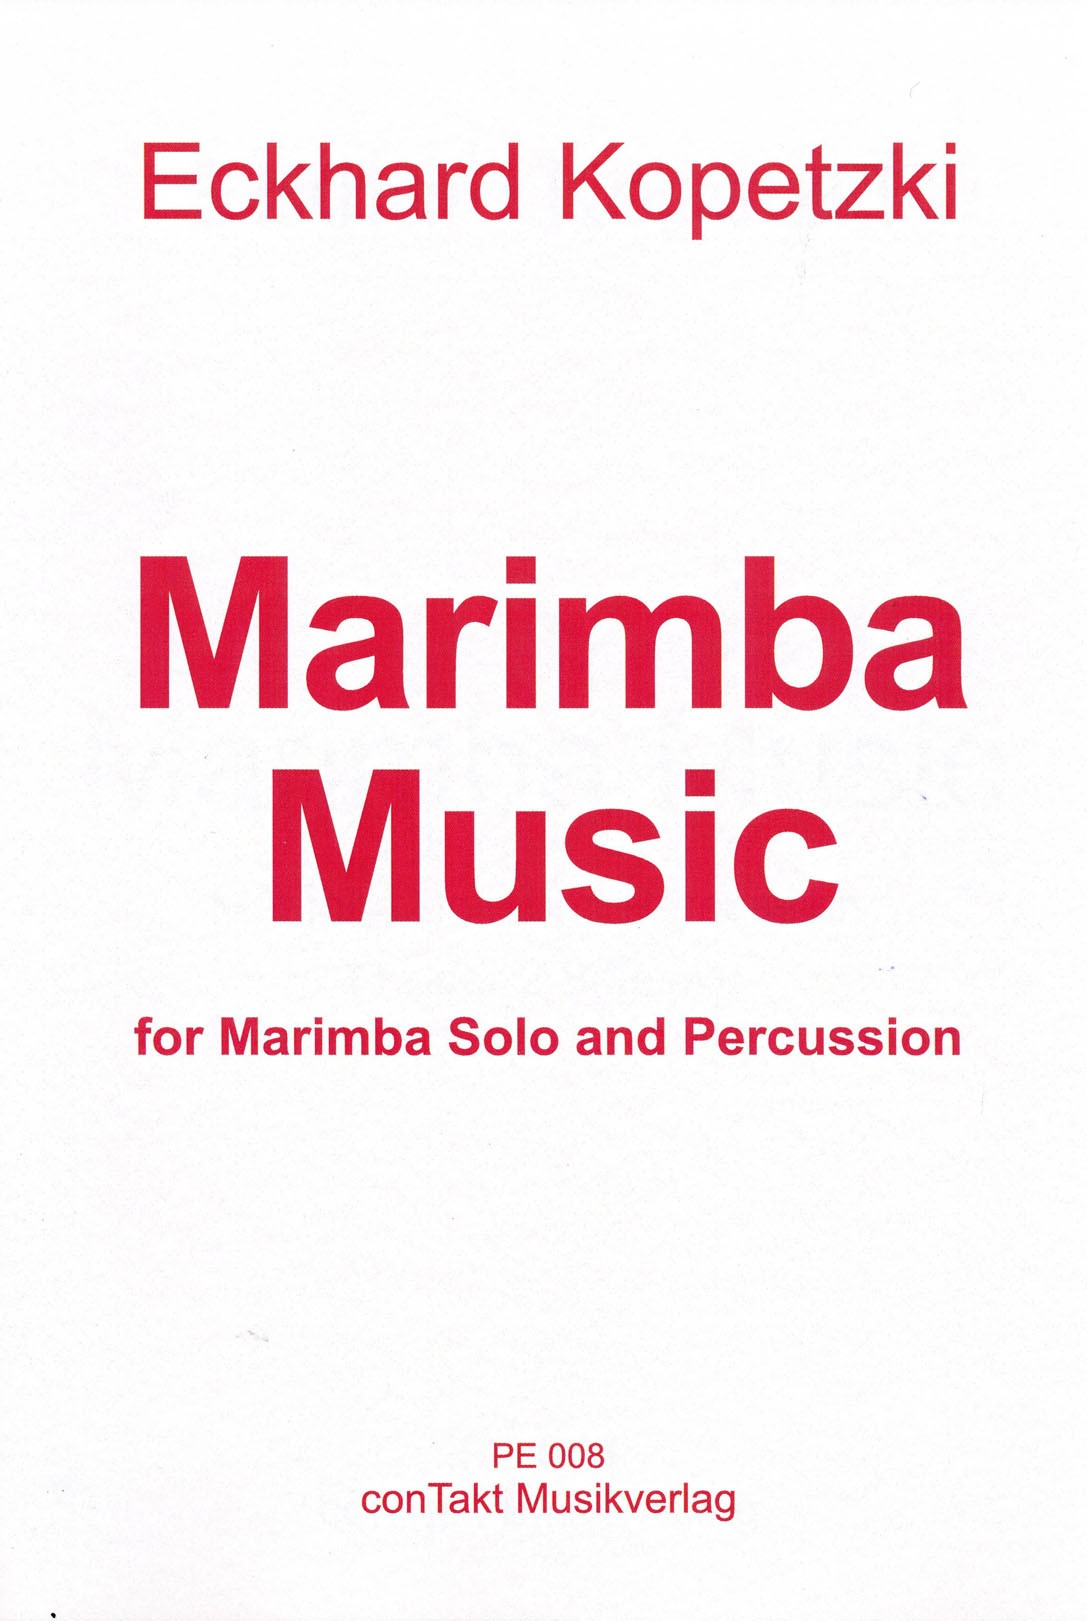 Marimba Music by Eckhard Kopetzki